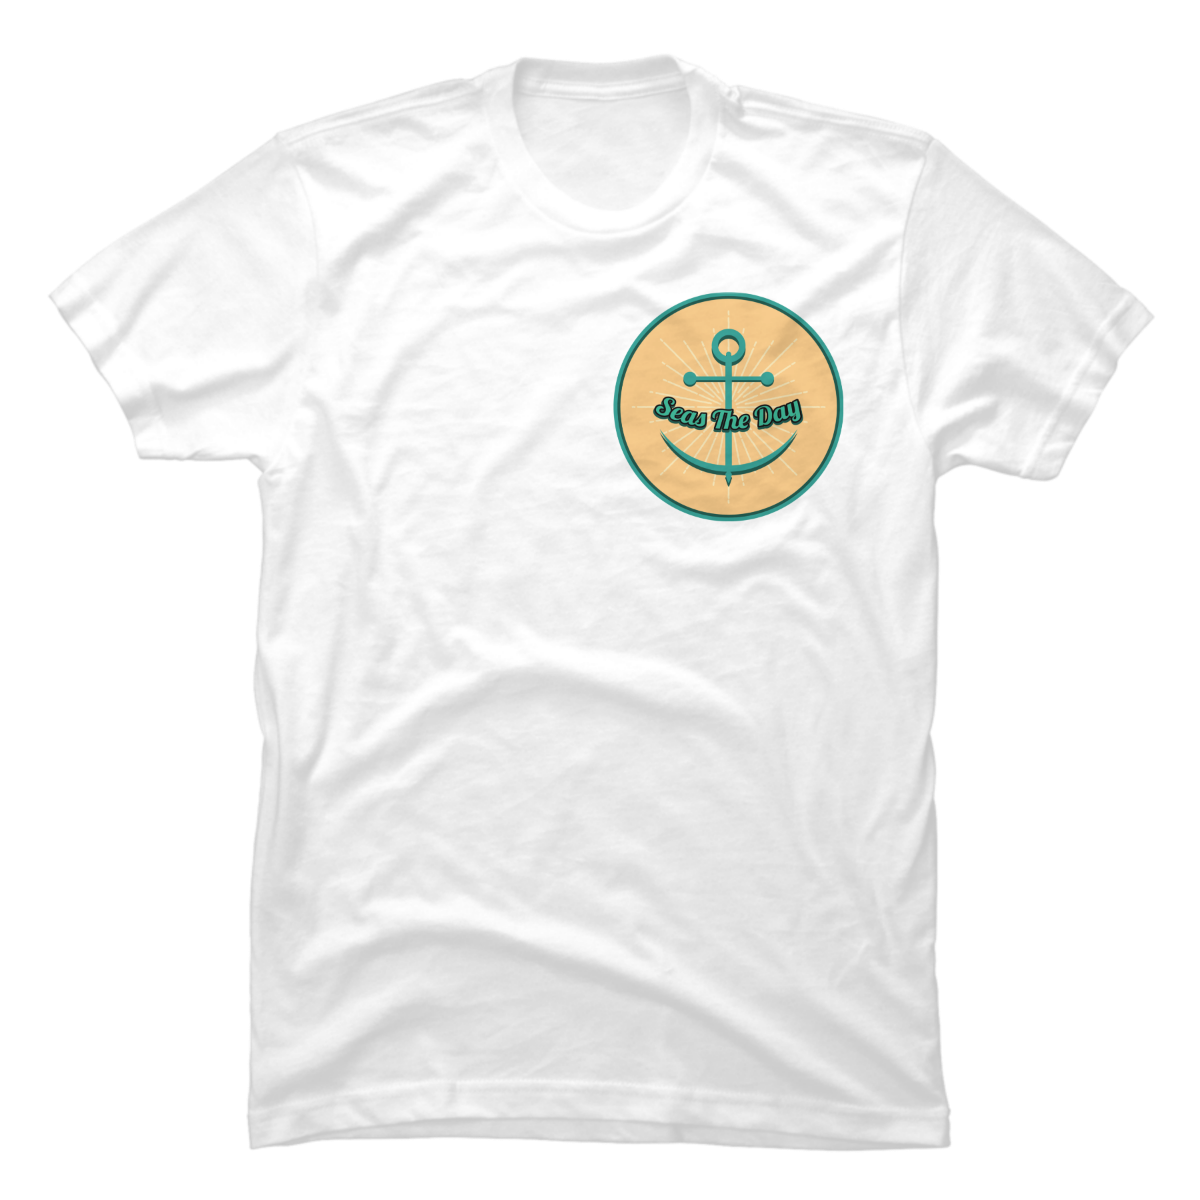 seas the day shirt